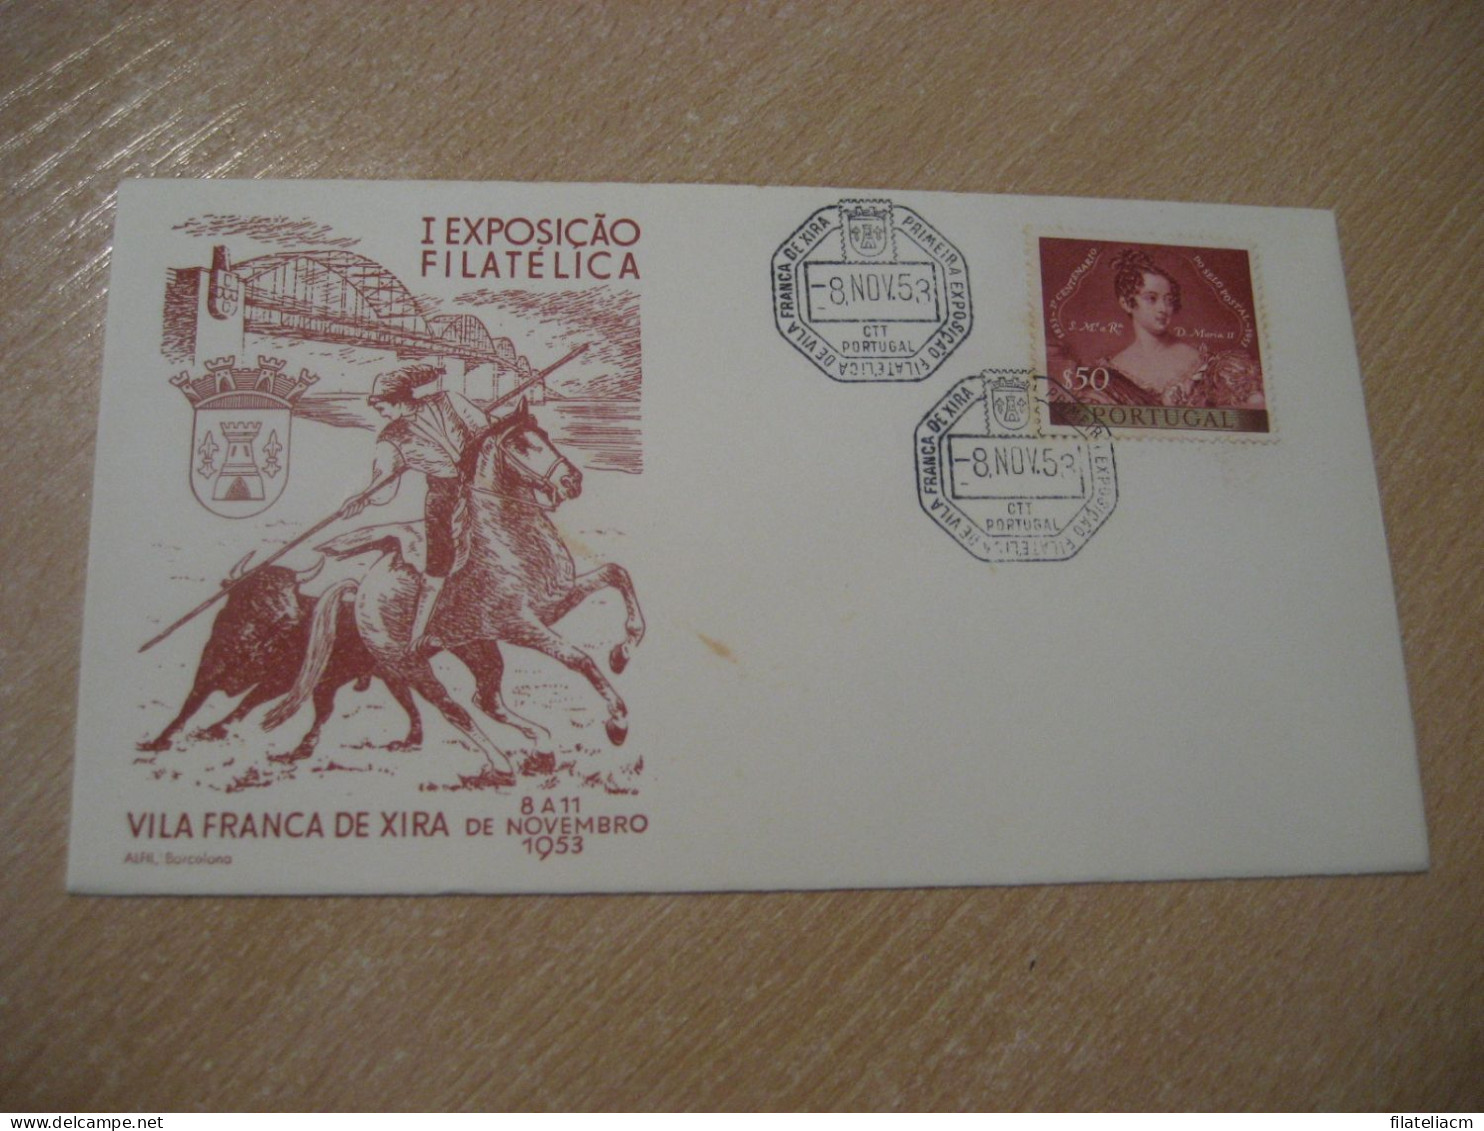 VILA FRANCA DE XIRA 1953 Expo Filatelica Toro Rejoneador Cow Bull Horse Matador Cancel Cover PORTUGAL - Briefe U. Dokumente